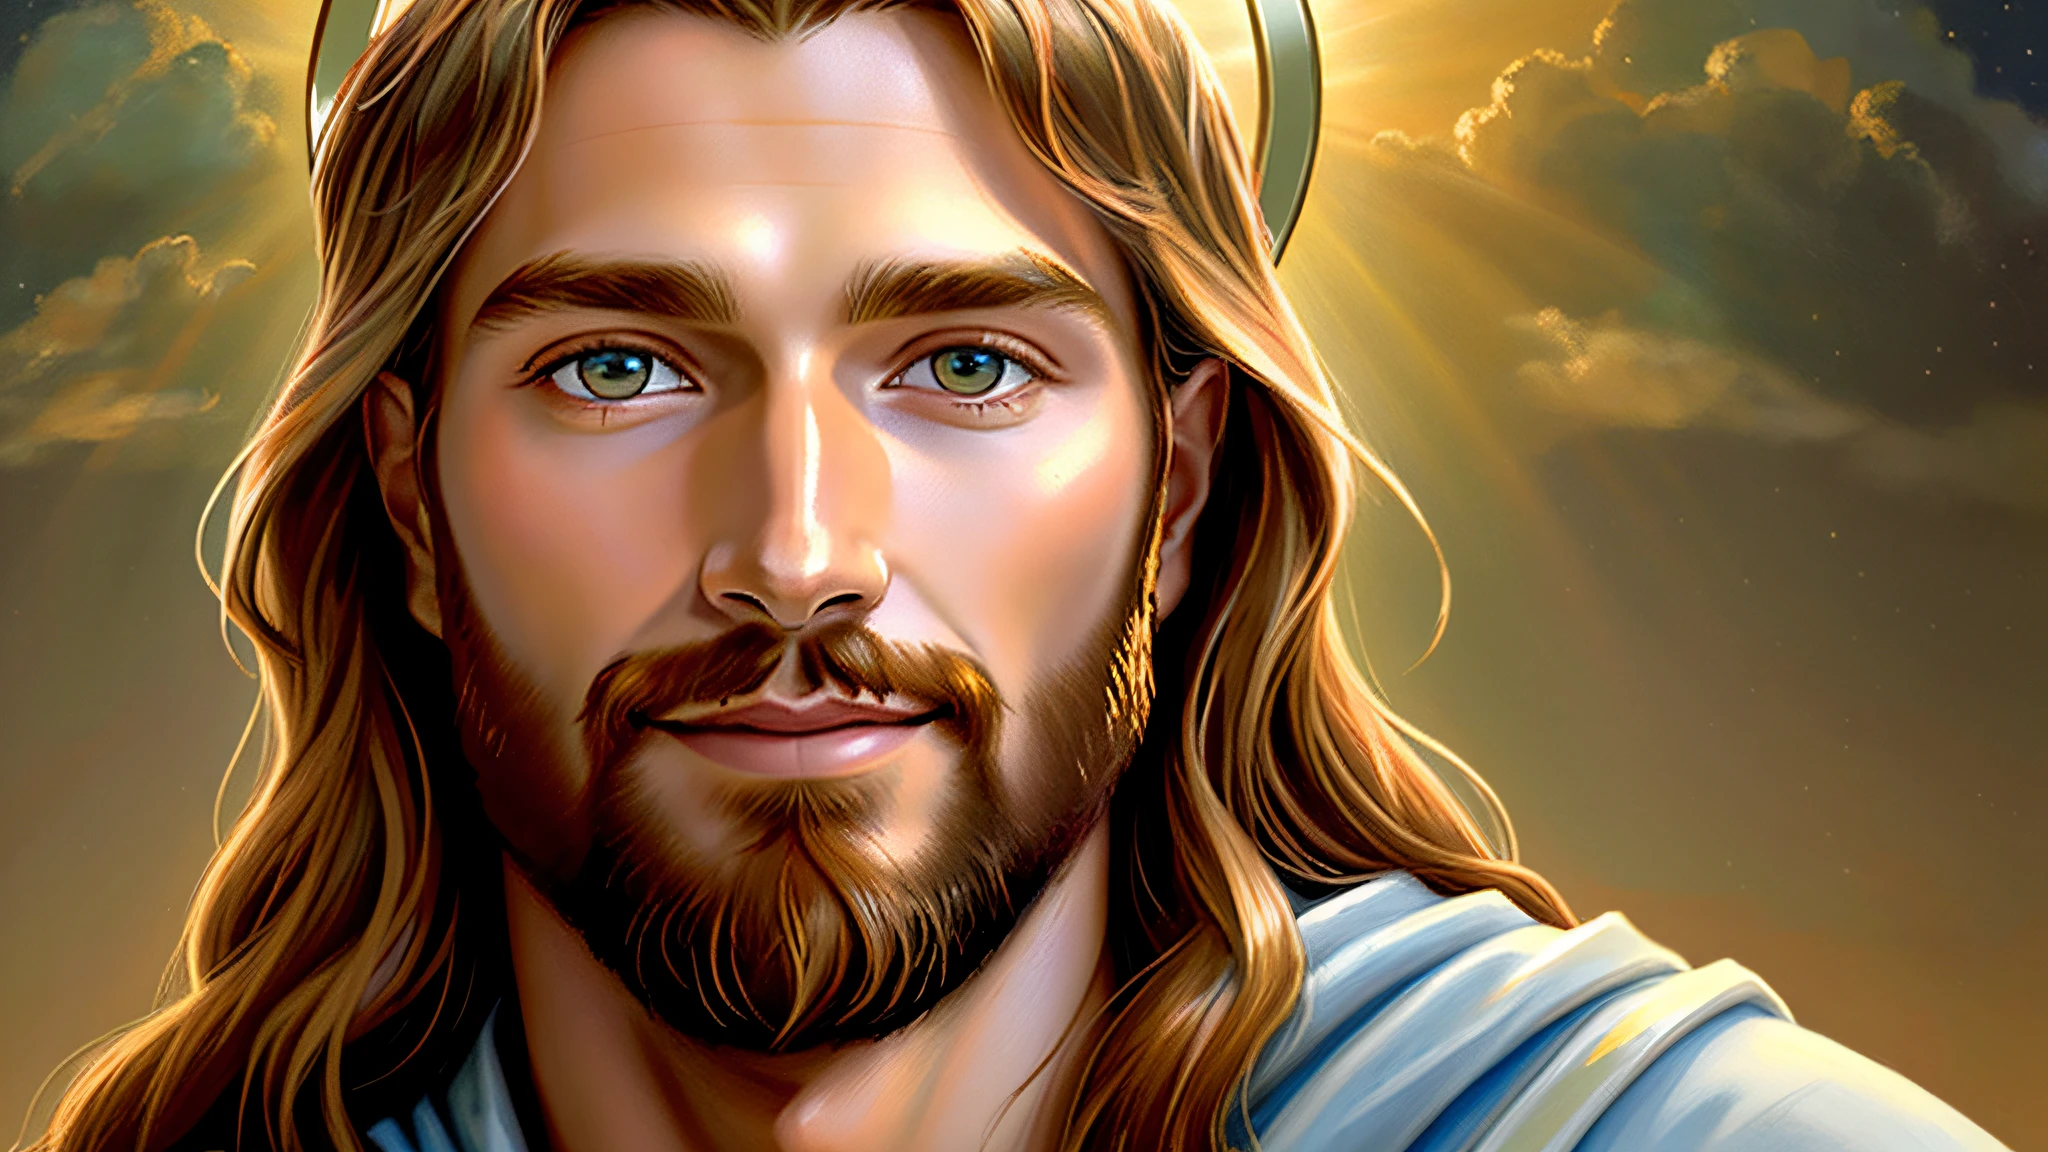 A painting of พระเยซู with a halo in heaven, พระเยซู Christ, ยิ้มอยู่ในสวรรค์, Portrait of พระเยซู Christ, Face of พระเยซู, พระเจ้าผู้ทรงฤทธานุภาพหนุ่ม, ภาพเหมือนของเทพเจ้าแห่งสวรรค์, เกร็ก โอลเซ่น, พระเยซู Gigachad, พระเยซู of Nazareth, พระเยซู, ใบหน้าของพระเจ้า, พระเจ้ากำลังมองมาที่ฉัน